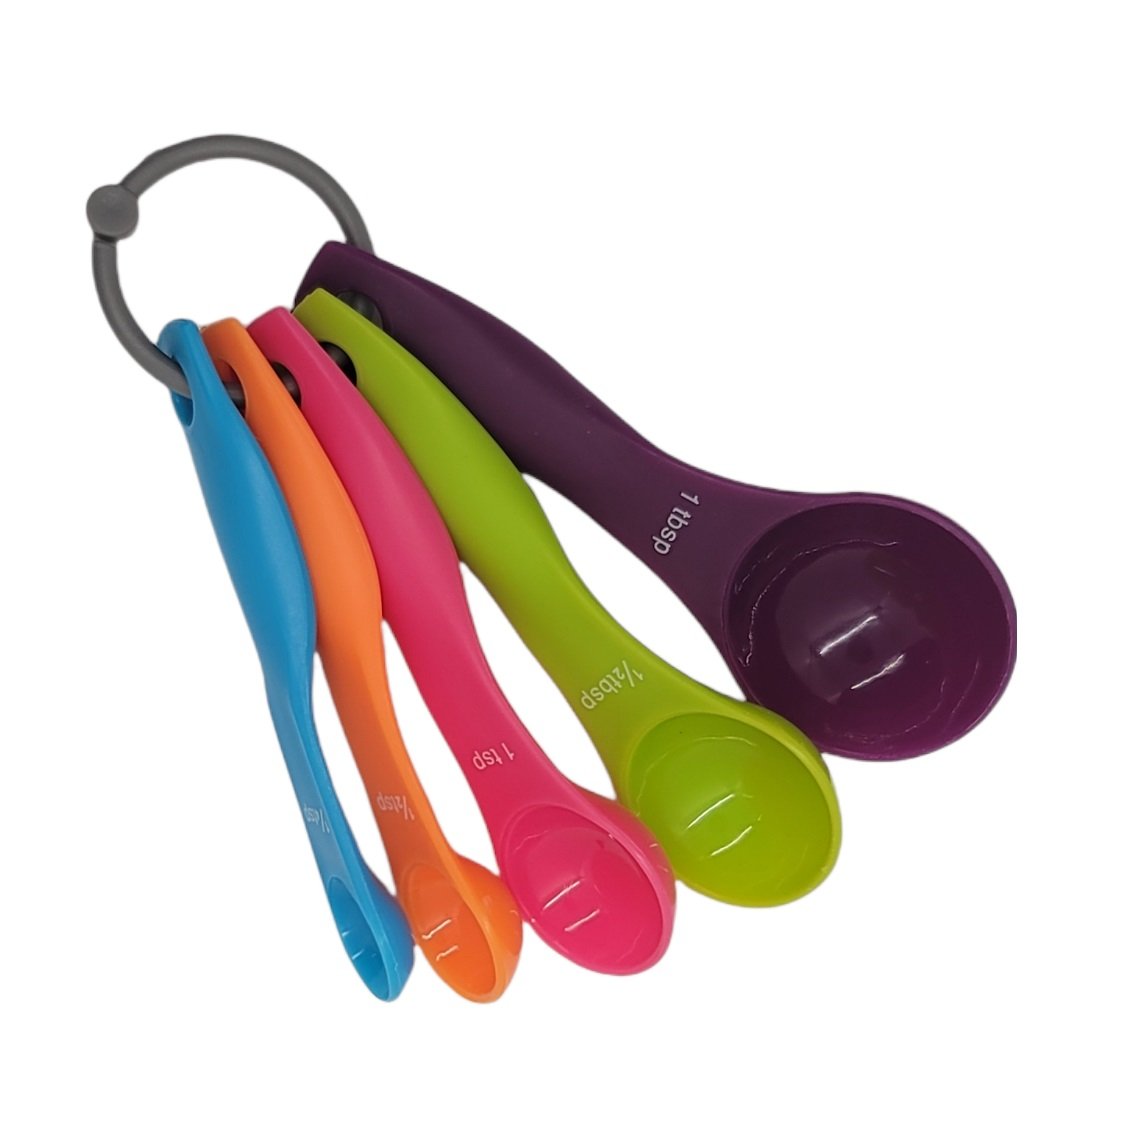 Handy Housewares 5 Piece Colorful Plastic Nesting Measuring Spoon